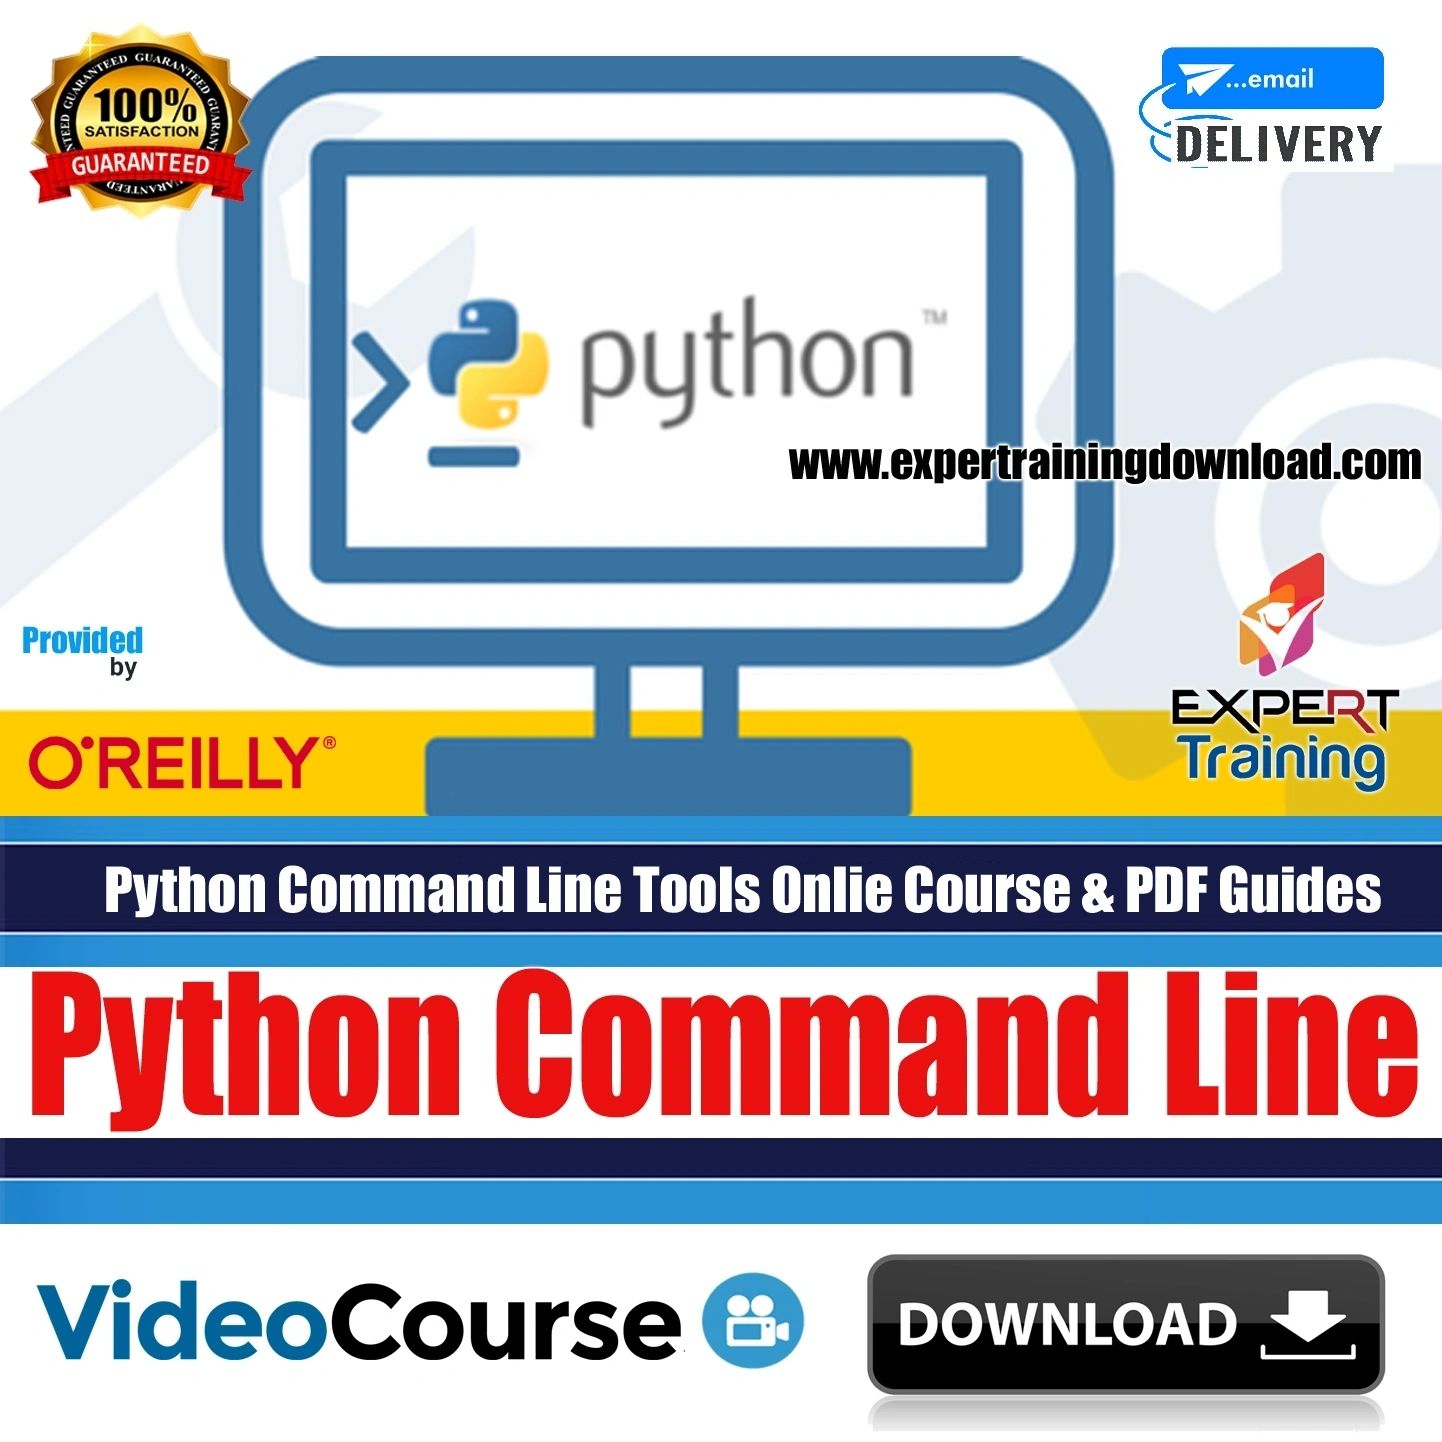 Python Command Line Tools Online Course & Guides